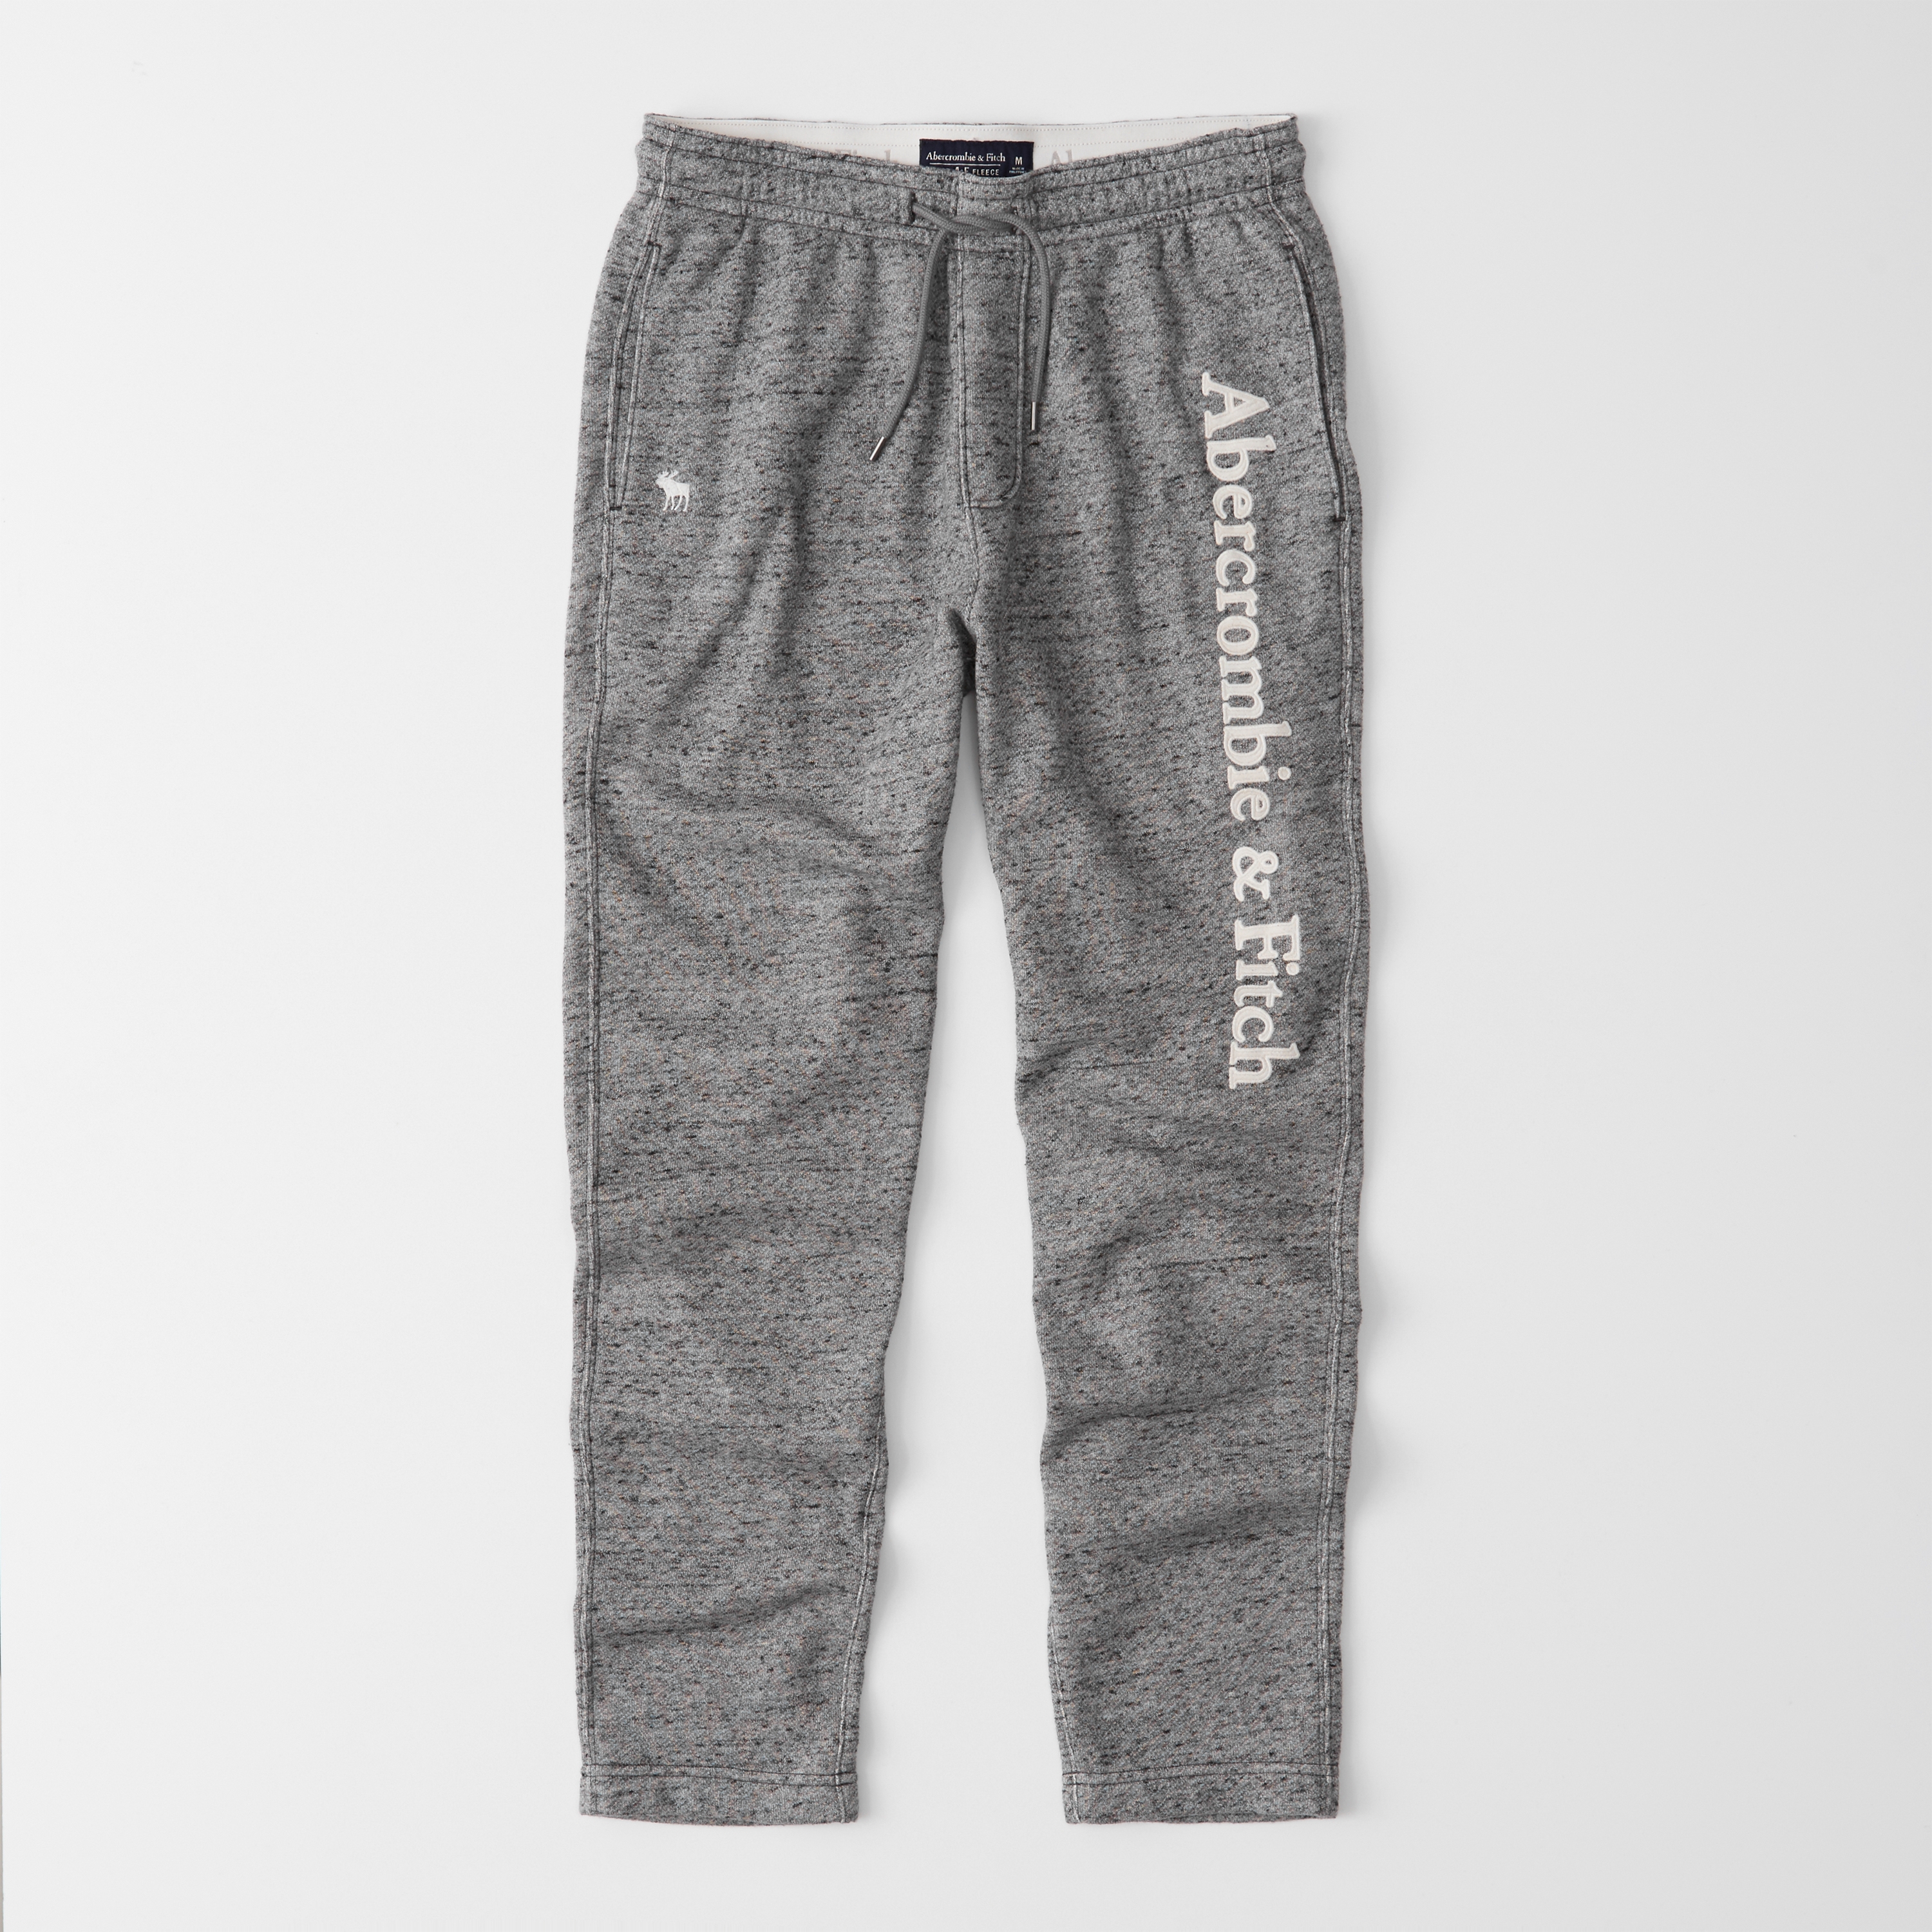 abercrombie & fitch classic sweatpants